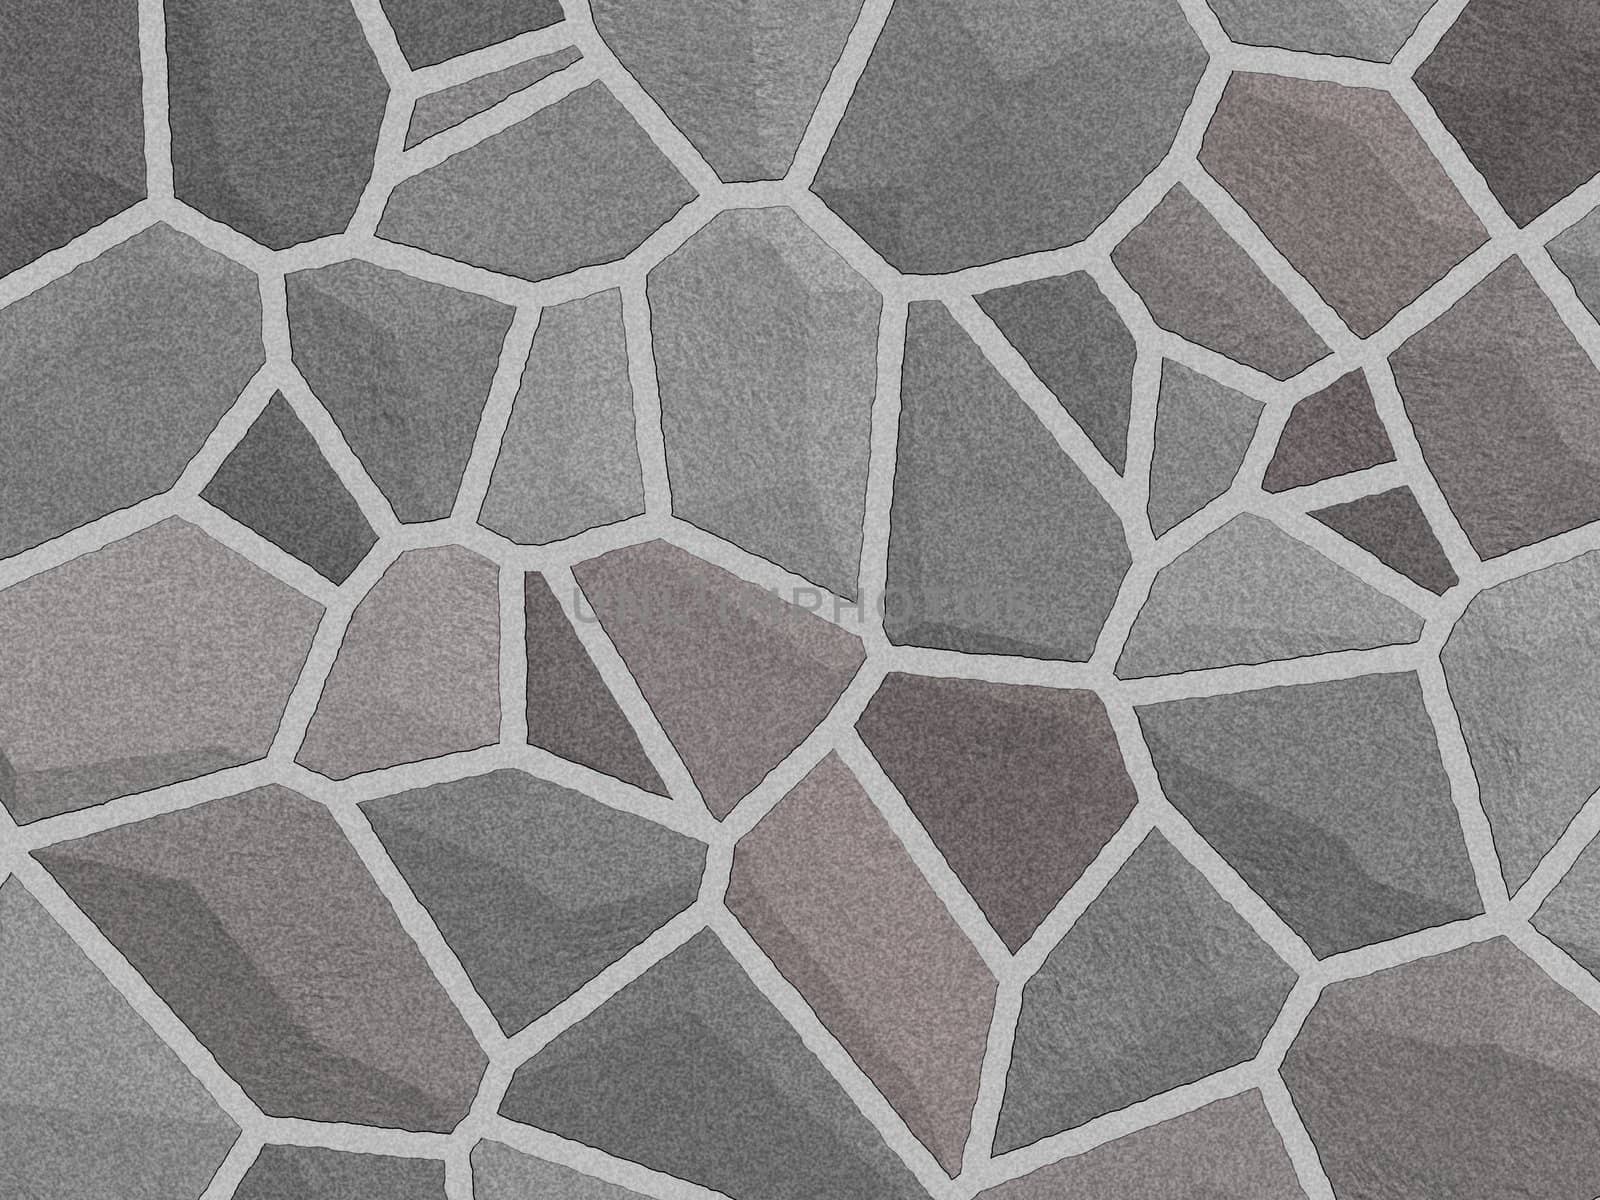  Texture stone sherd floor by peromarketing